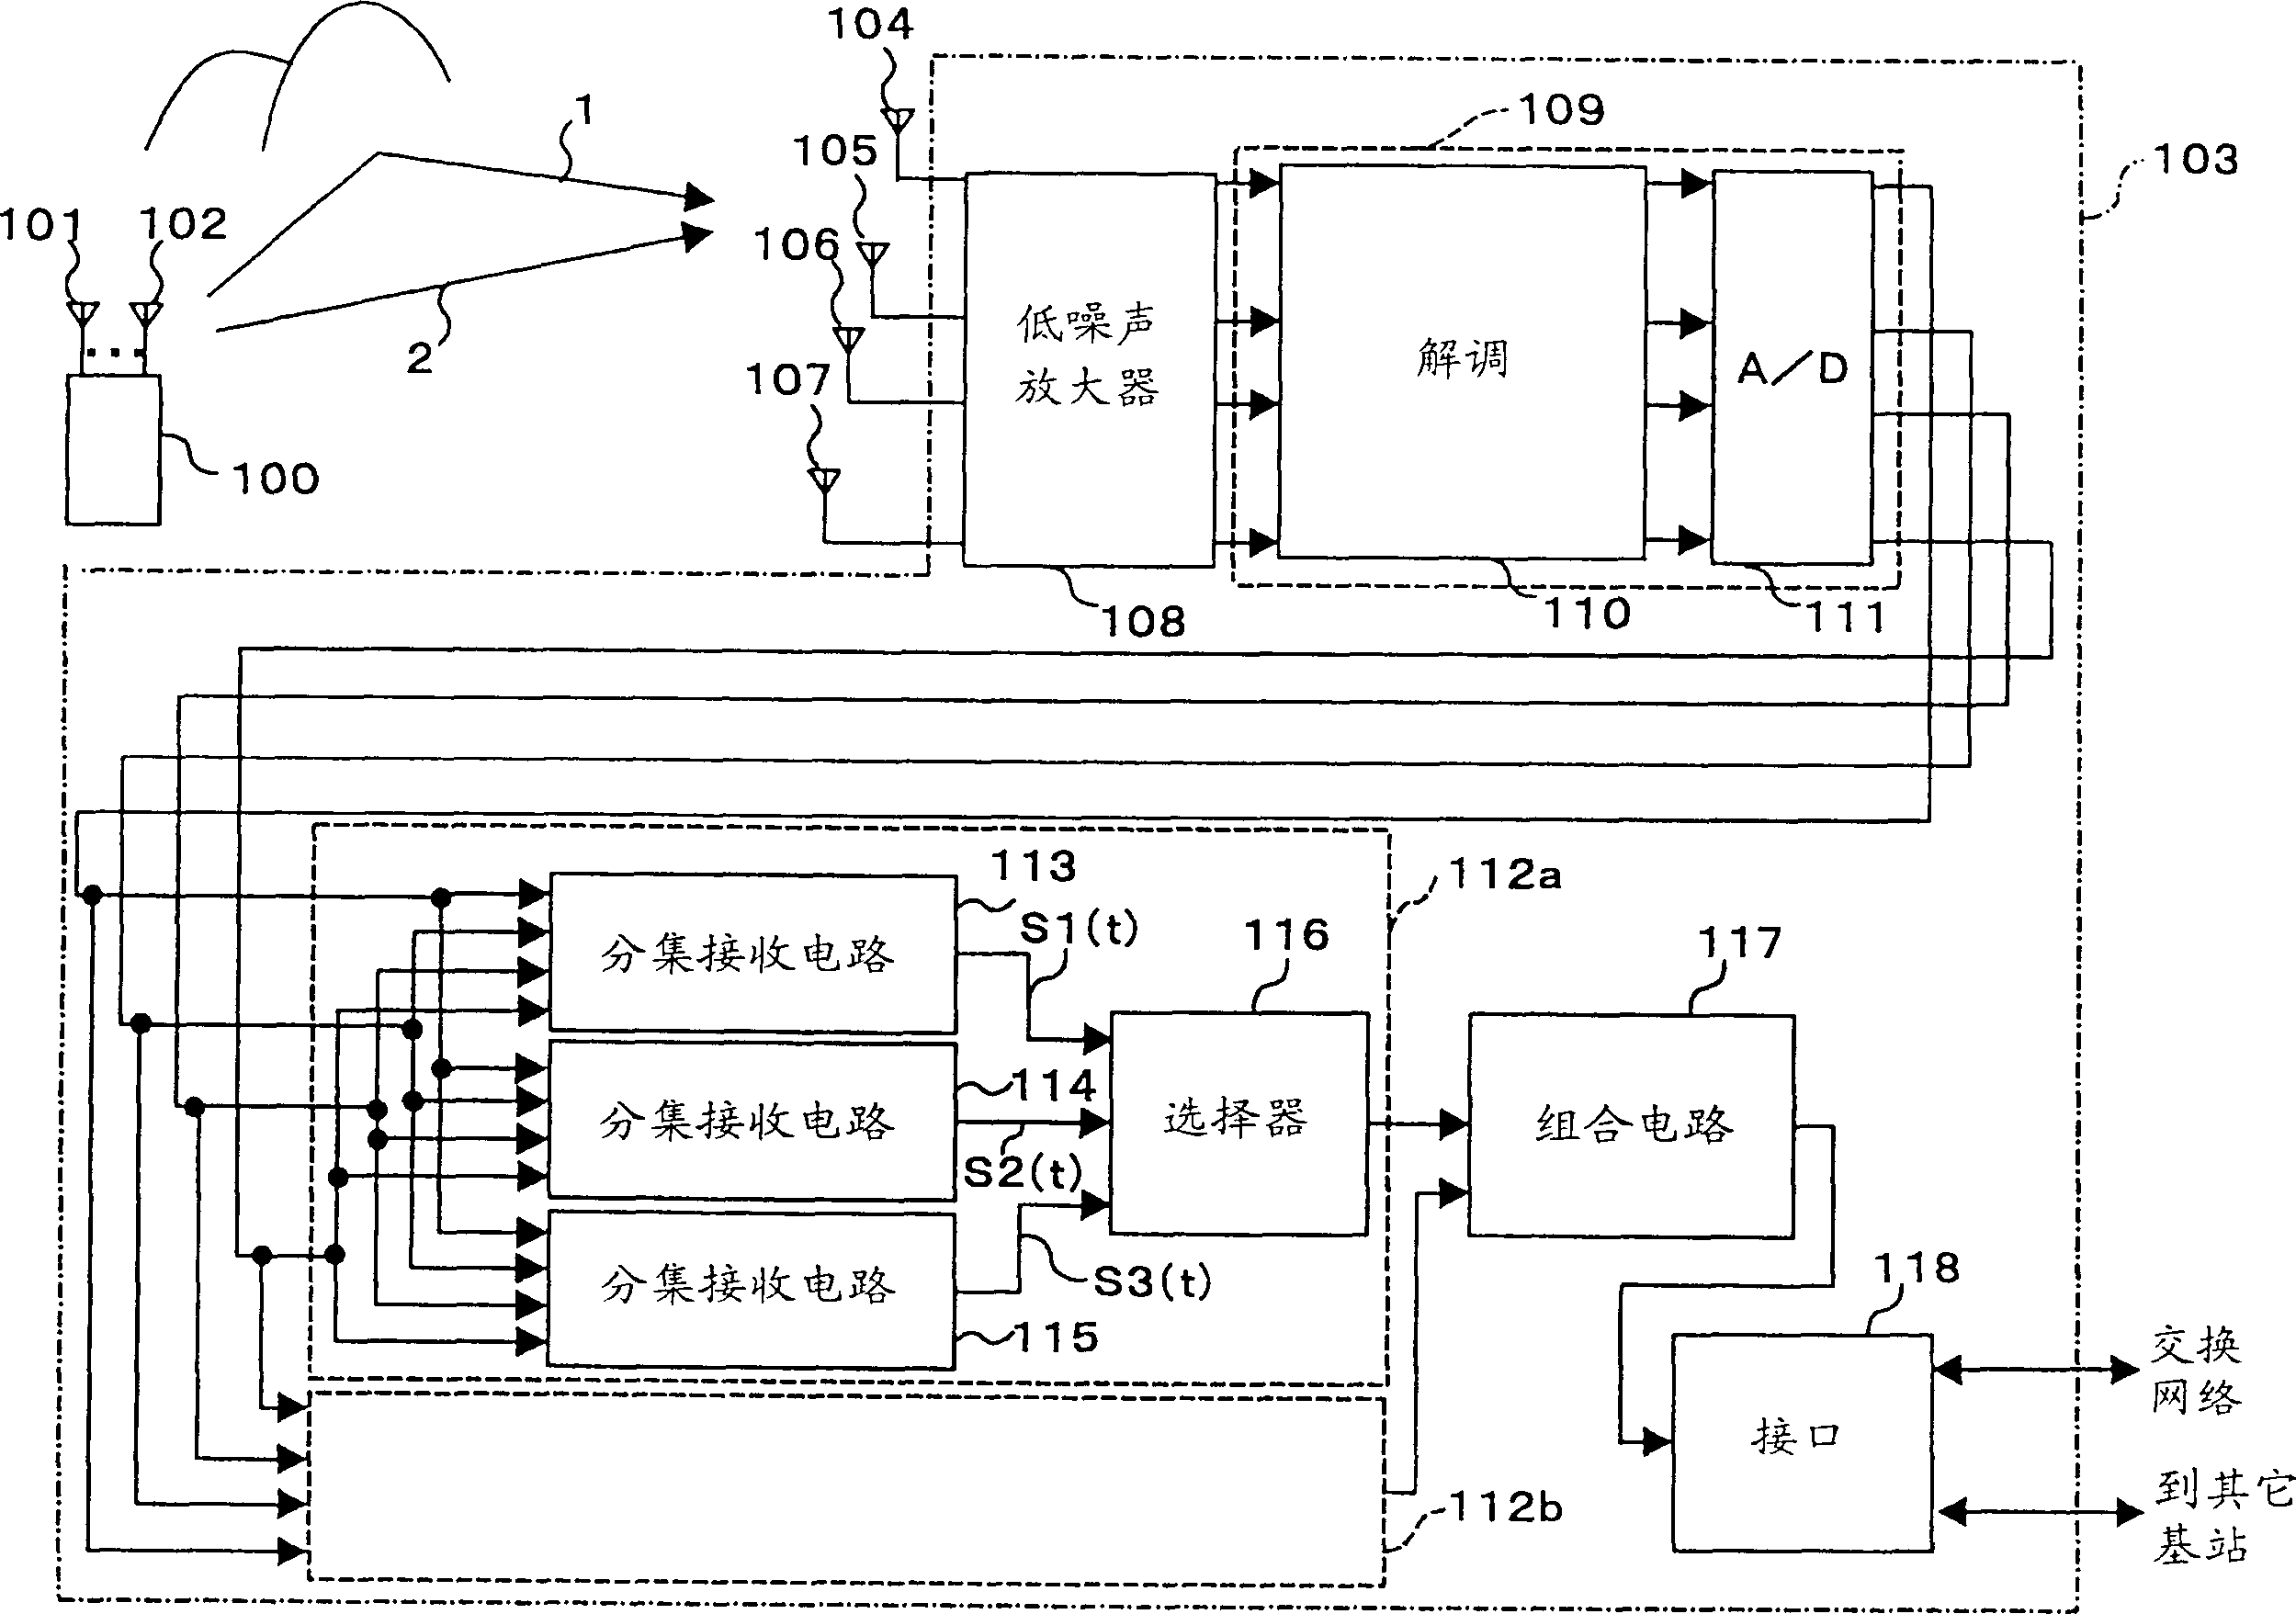 Method of directional reception using array antenna, and adaptive array antenna unit